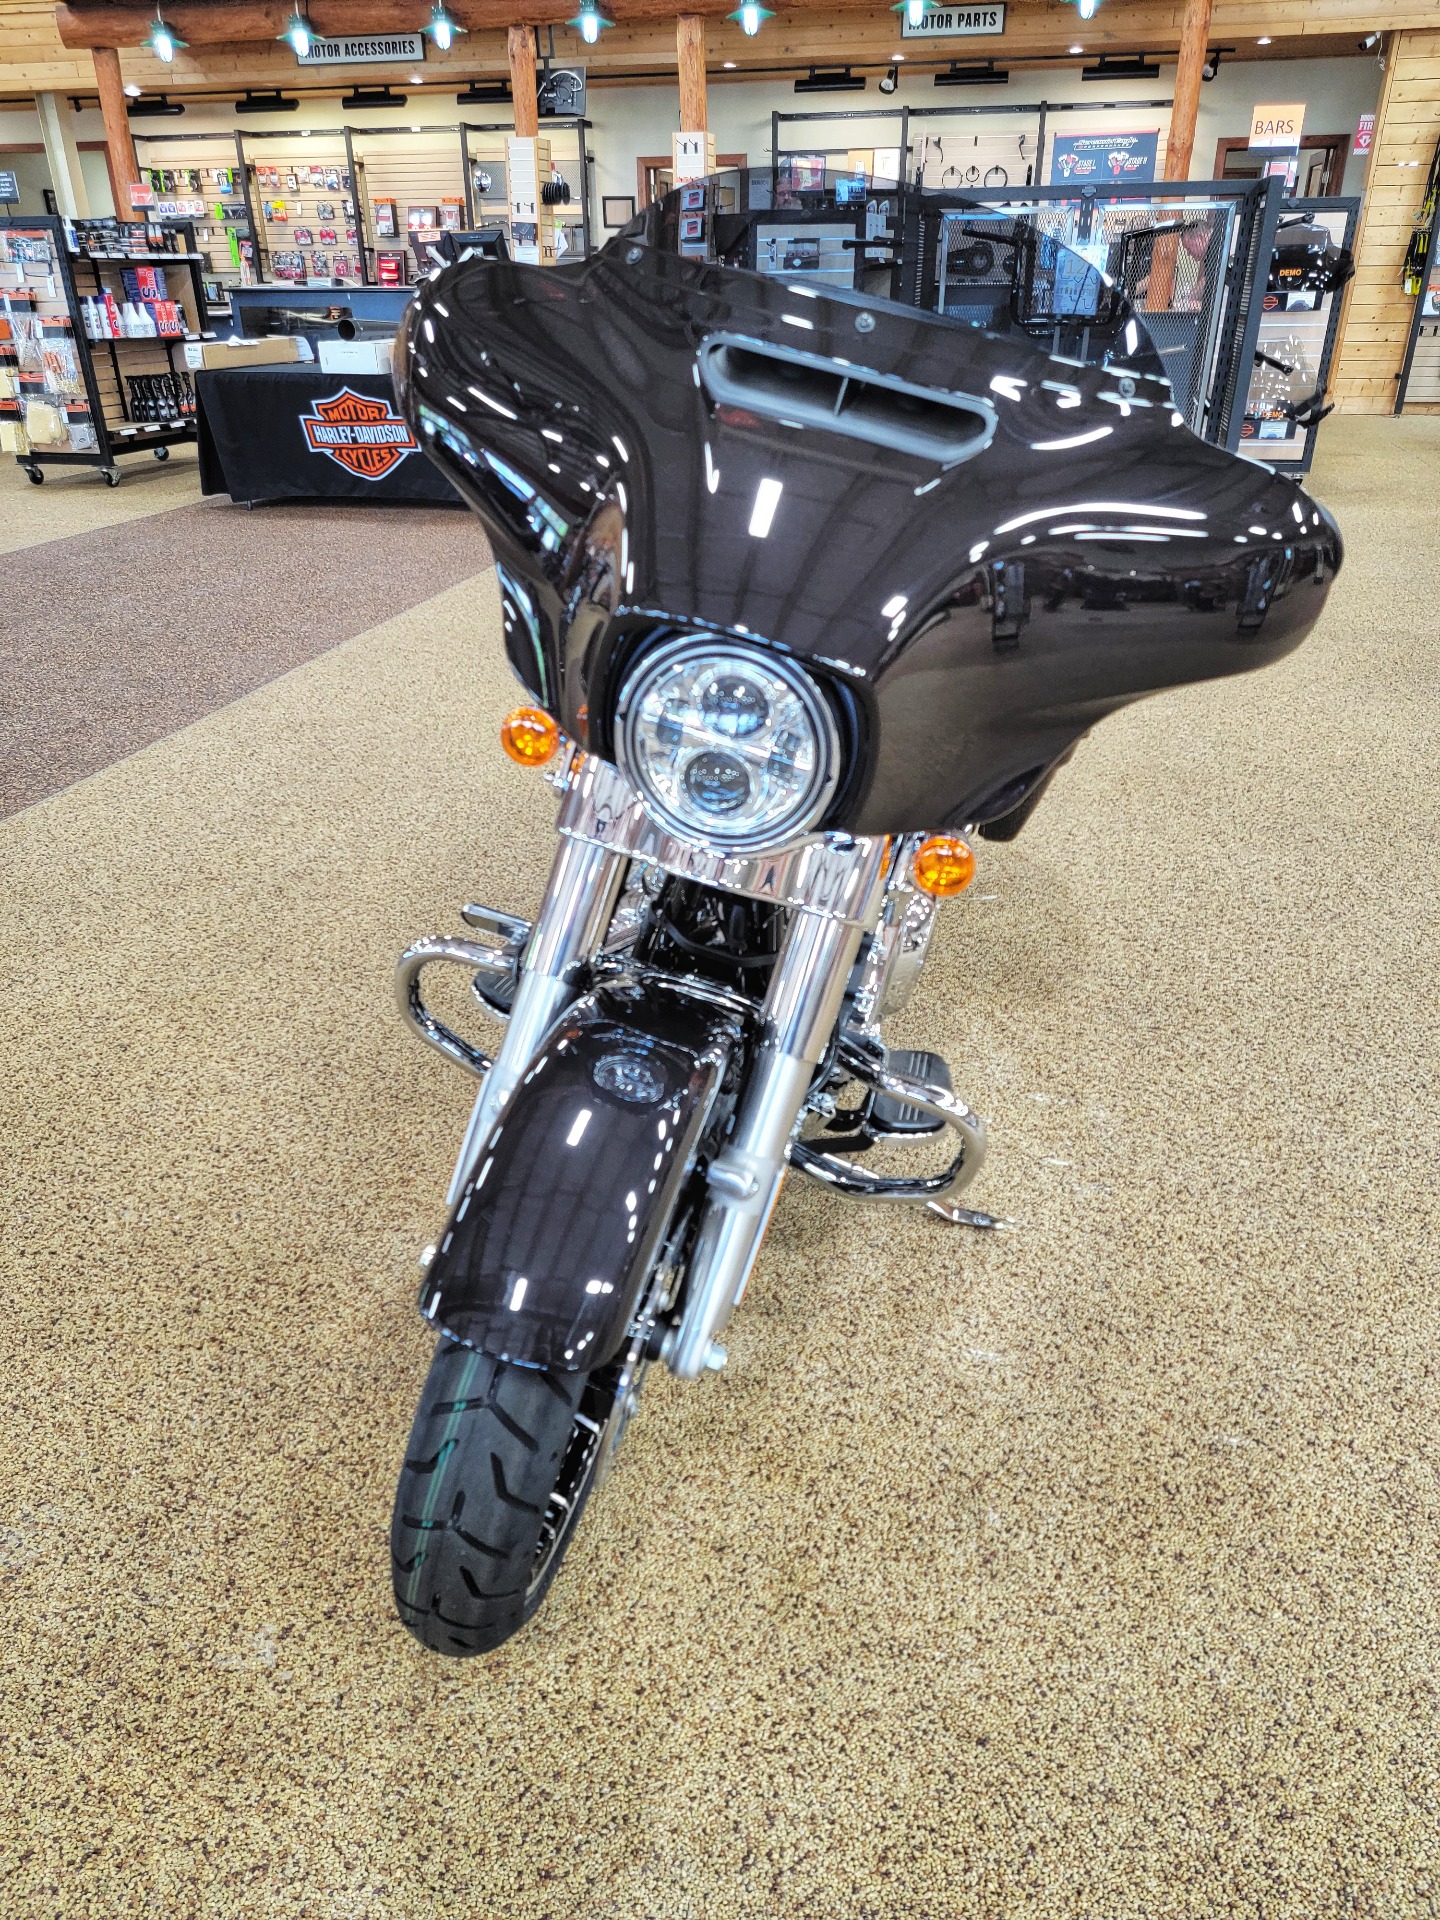 New 2021 Harley Davidson Street Glide Special Black Jack Metallic Chrome Option Motorcycles In Sauk Rapids Mn Fl624973